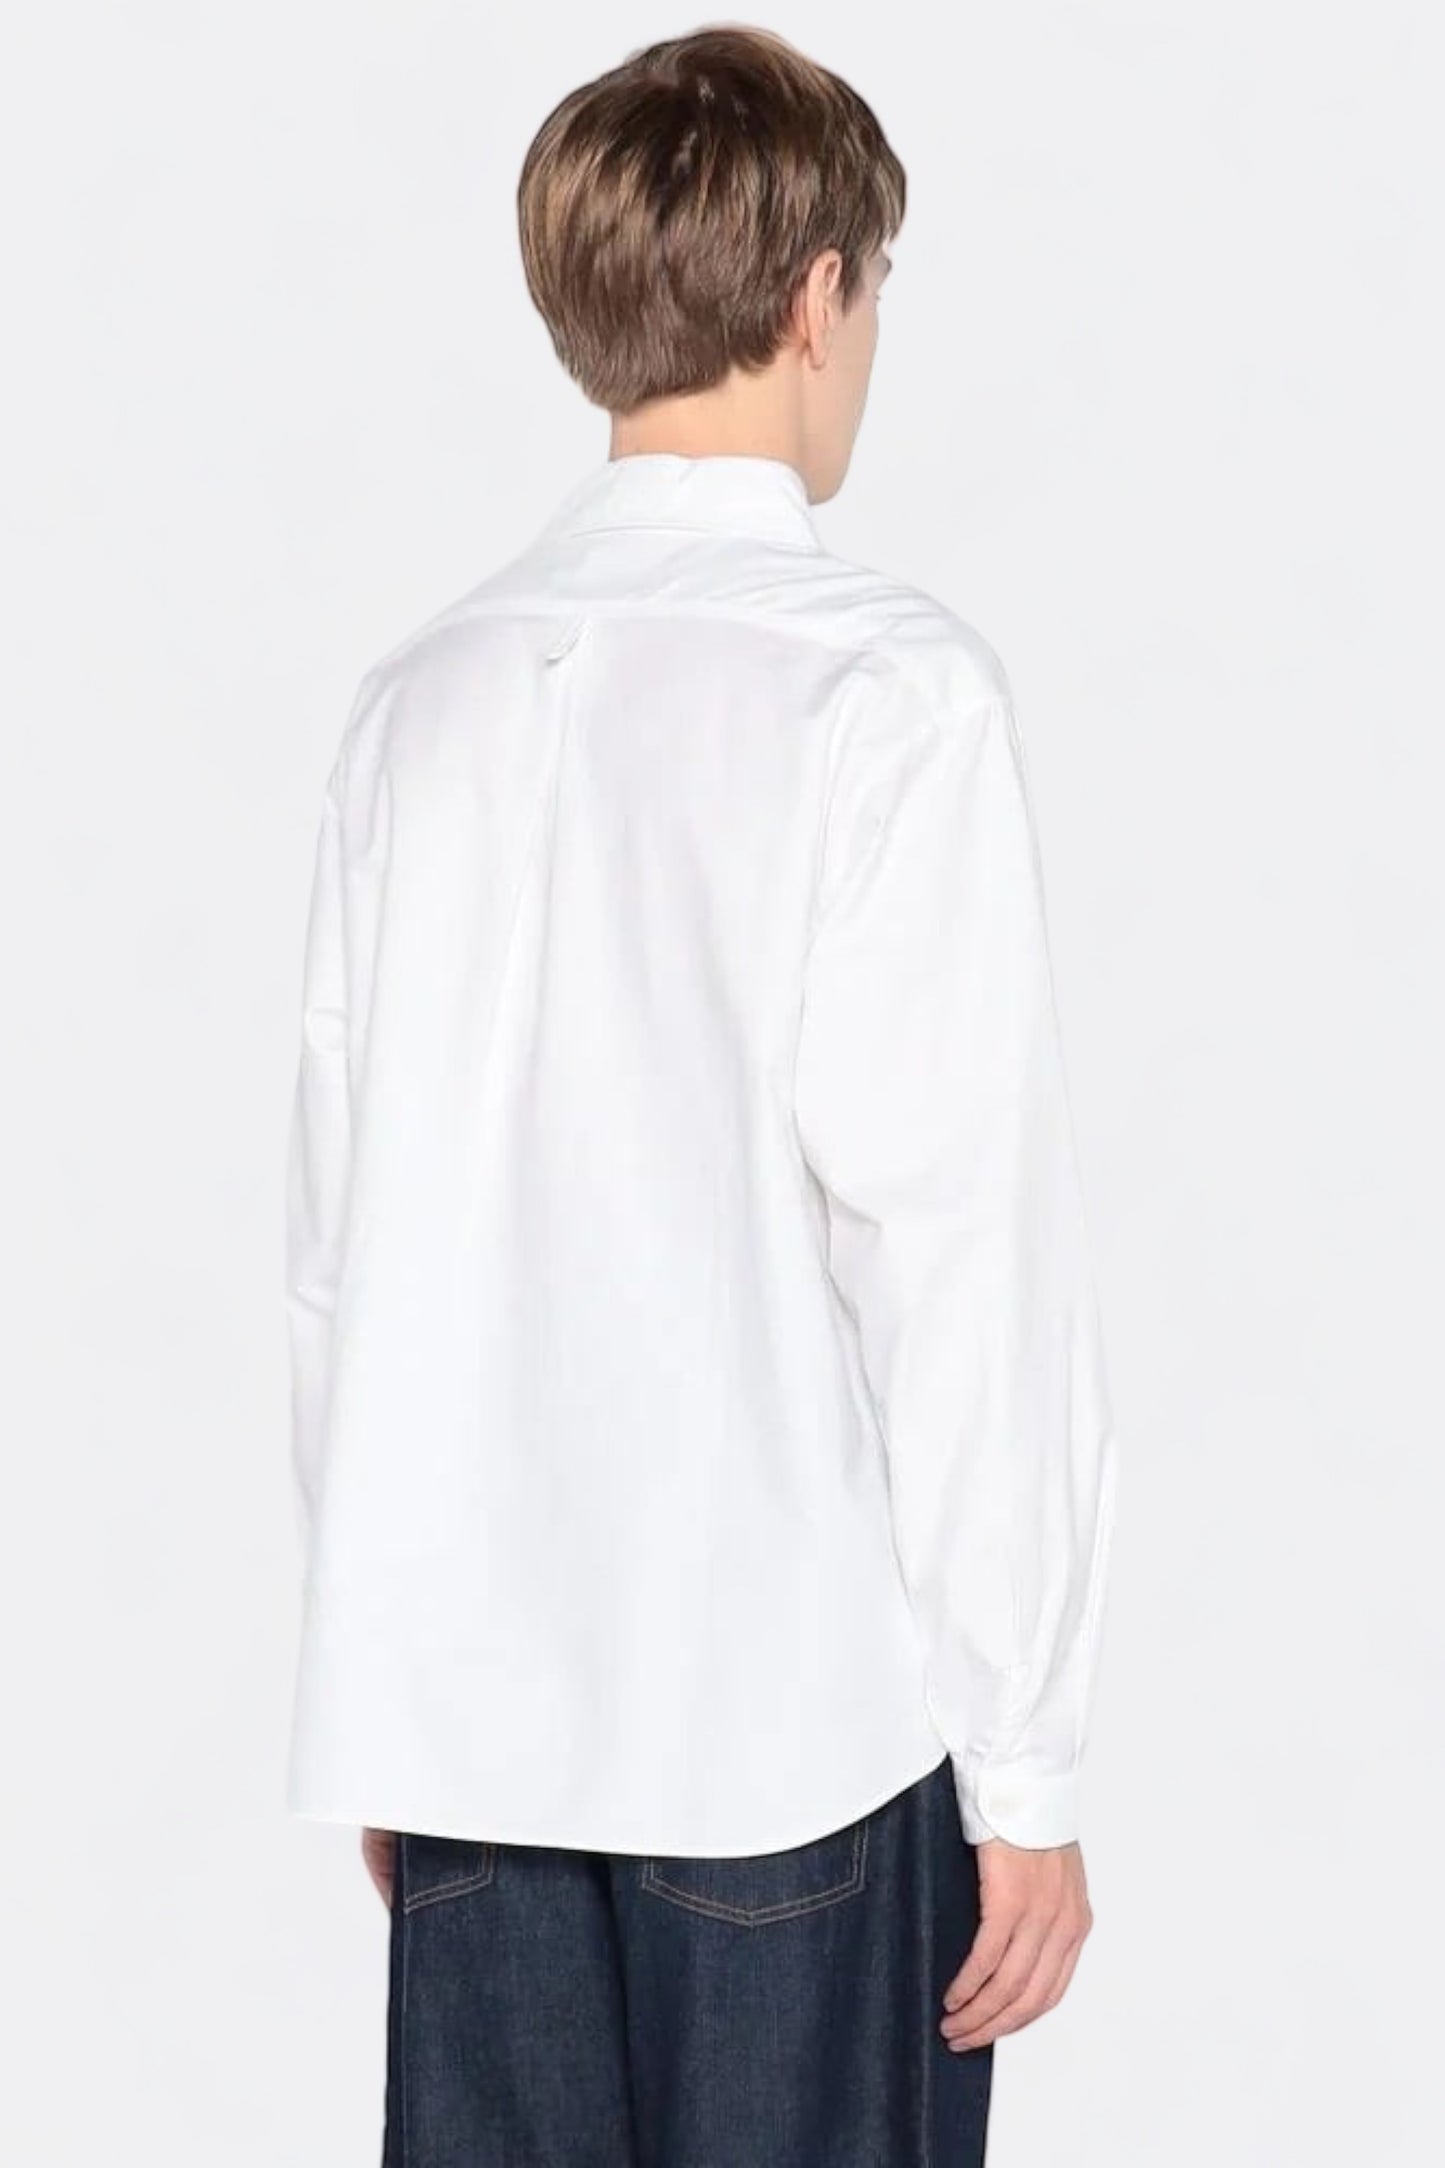 Danton - Plain Oxford Round Collar Pullover Shirt (Oyster)